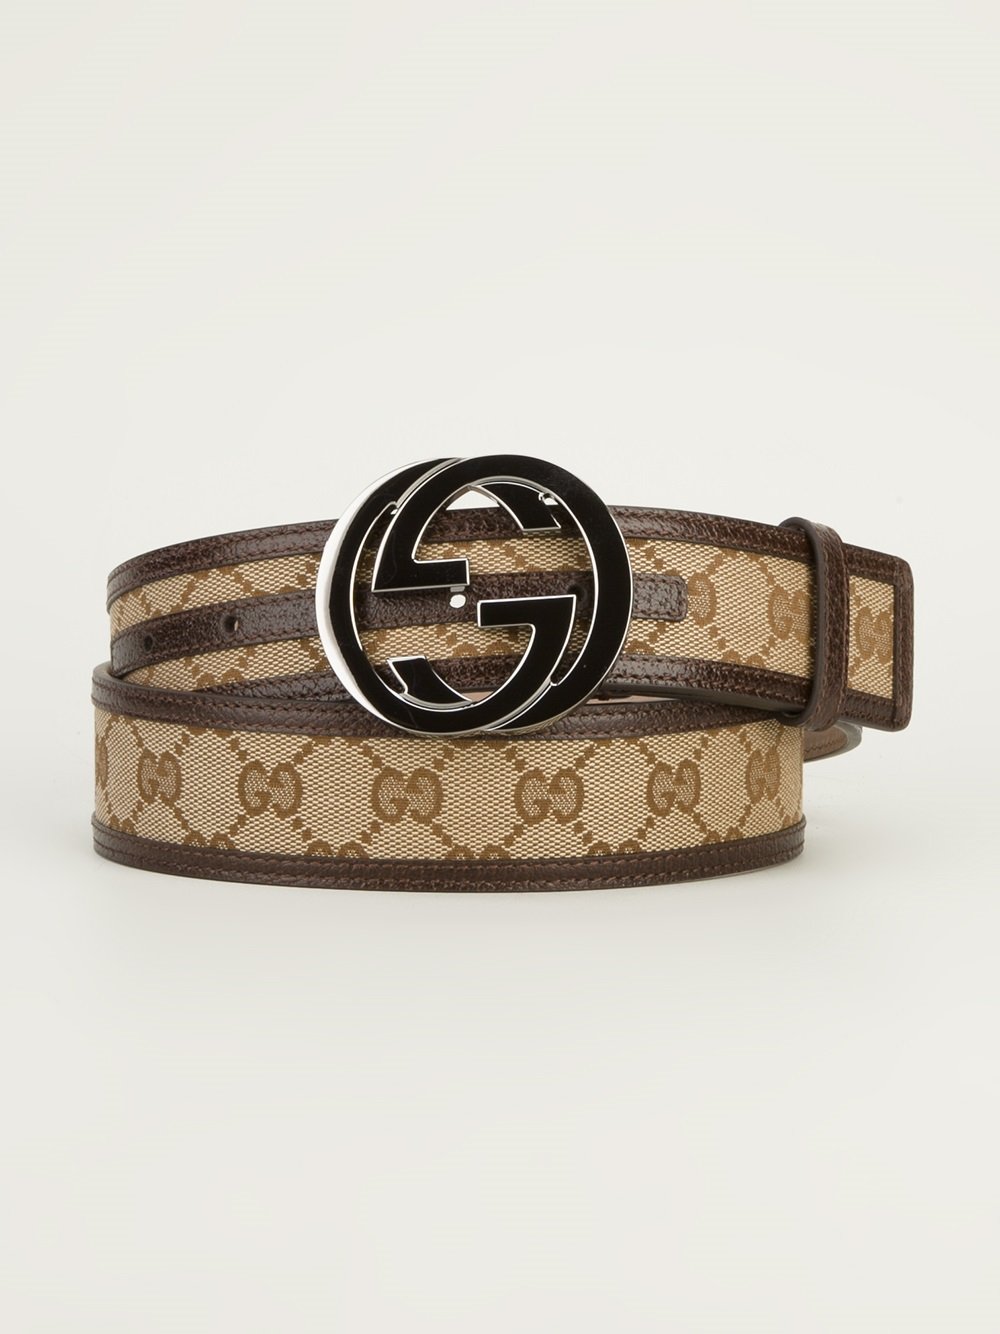 Lyst - Gucci Logo Belt in Brown for Men